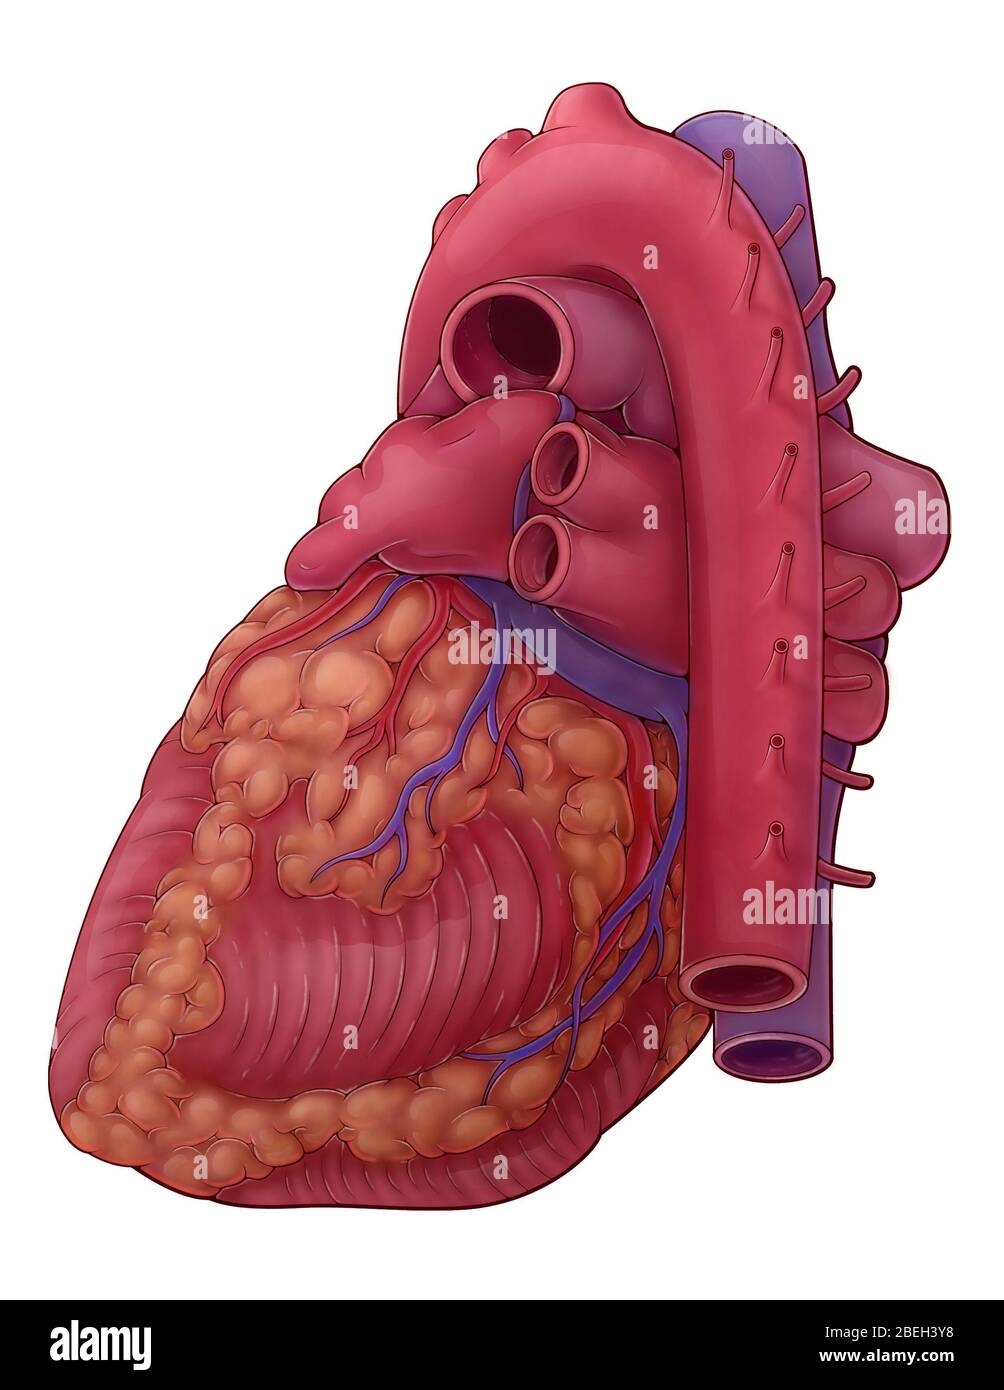 Arteria coronaria derecha fotografías e imágenes de alta resolución - Alamy